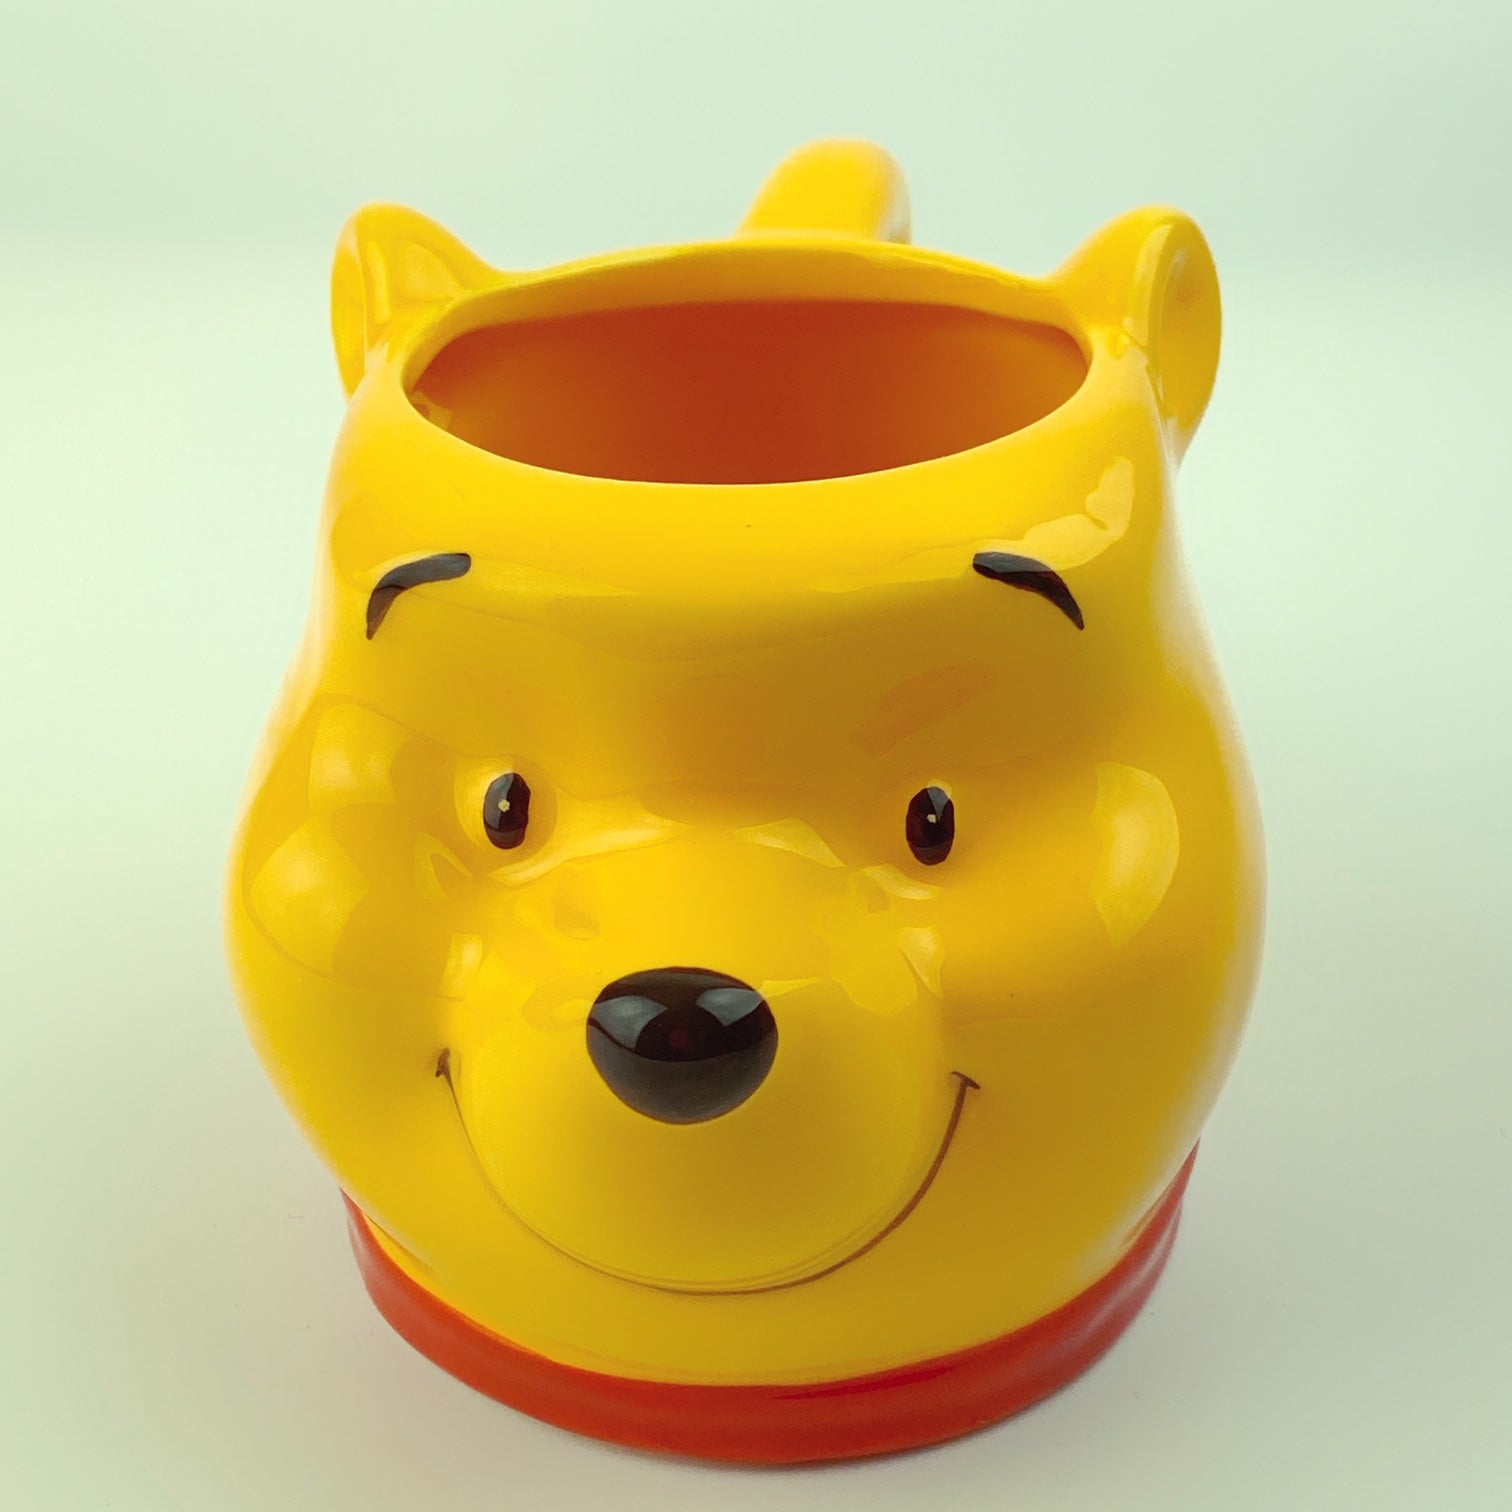 Disney Winnie the Pooh 3D Face Figural Mug – Pit-a-Pats.com